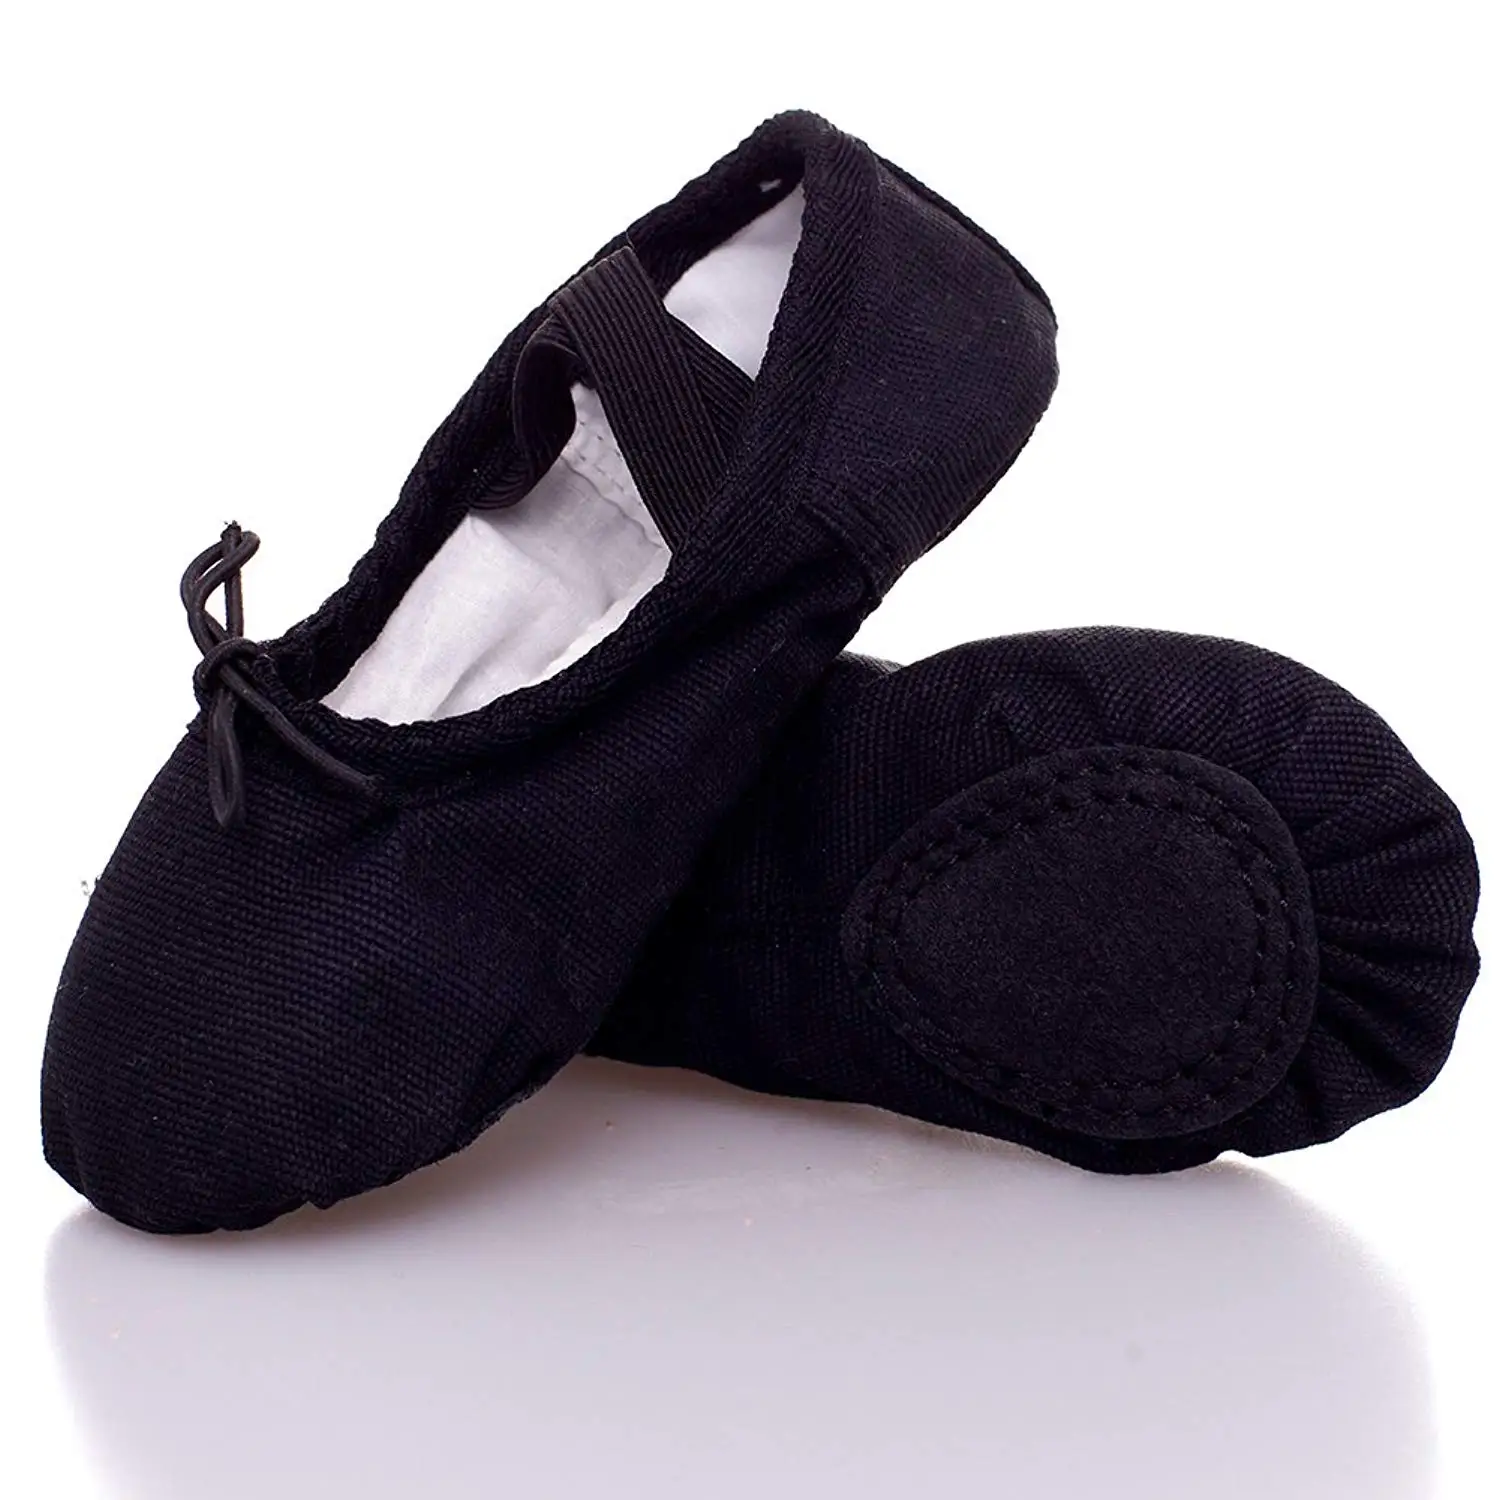 childrens black ballet shoes